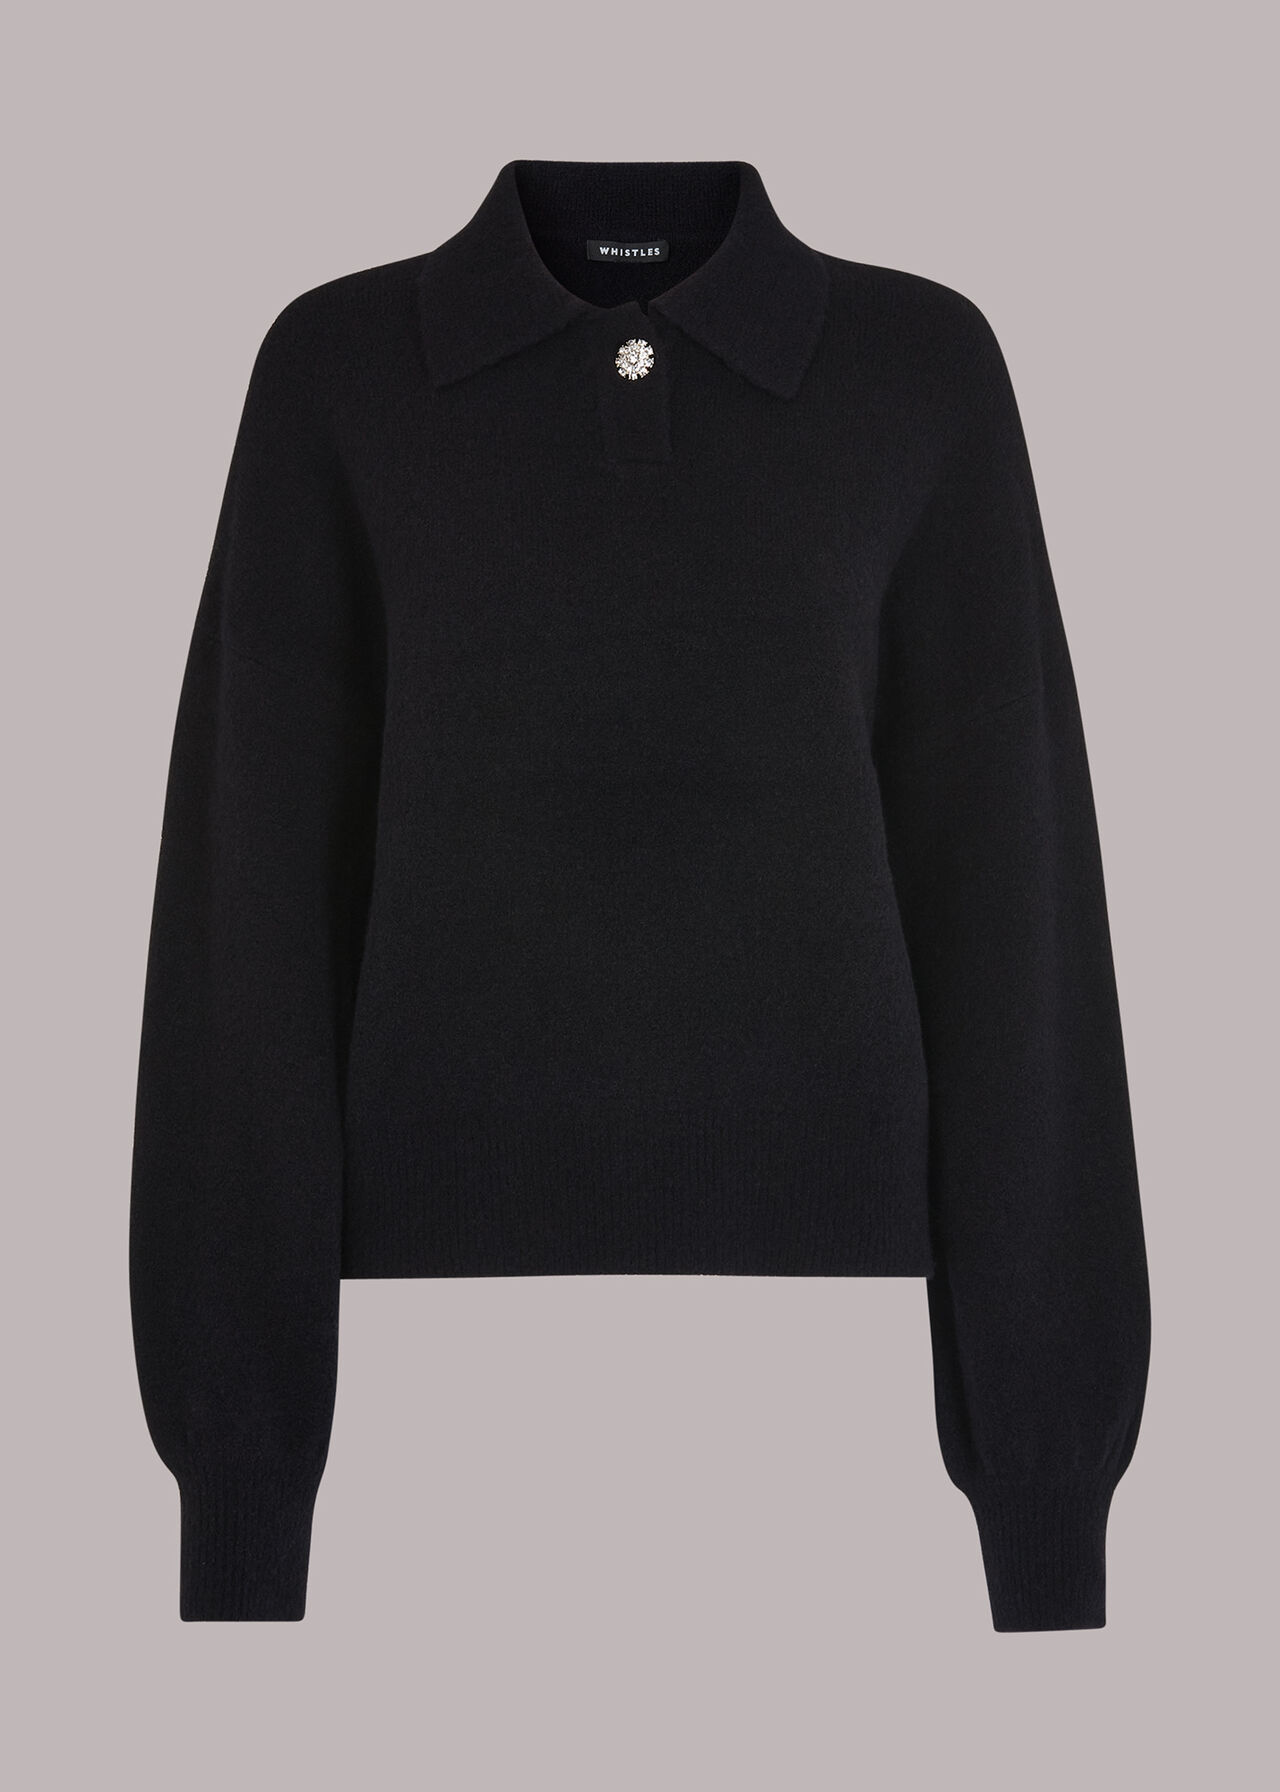 Jewel Button Collar Sweater